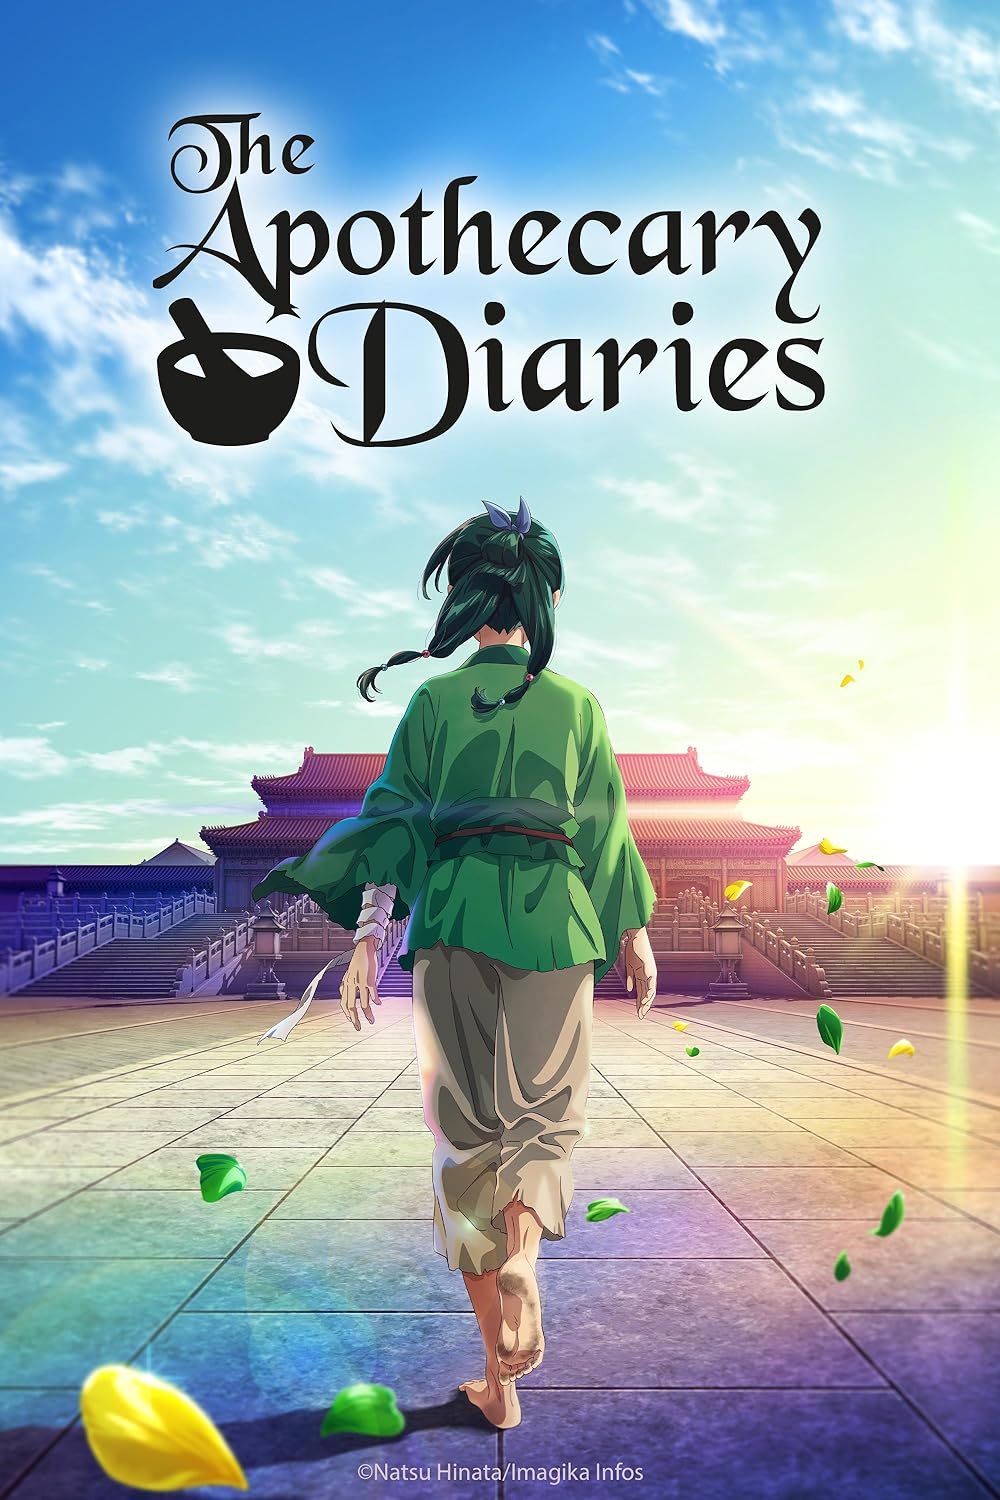 El cartel del anime The Apothecary Diaries.